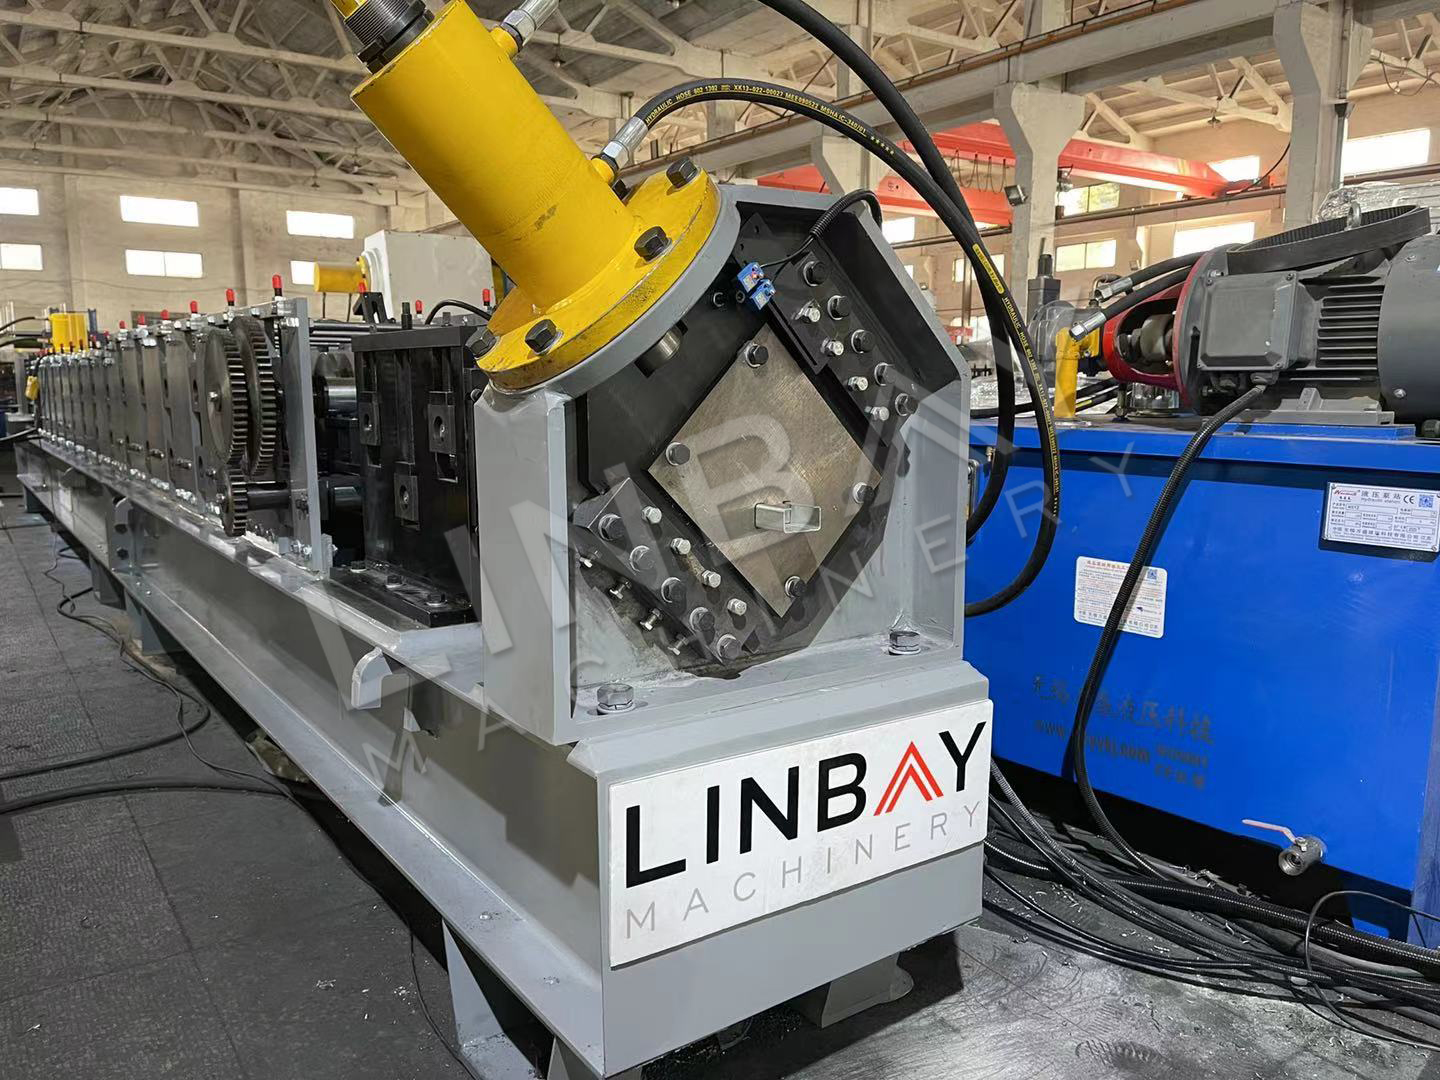 LINBAY-Exportación de Máquina para Riostras ma Chile